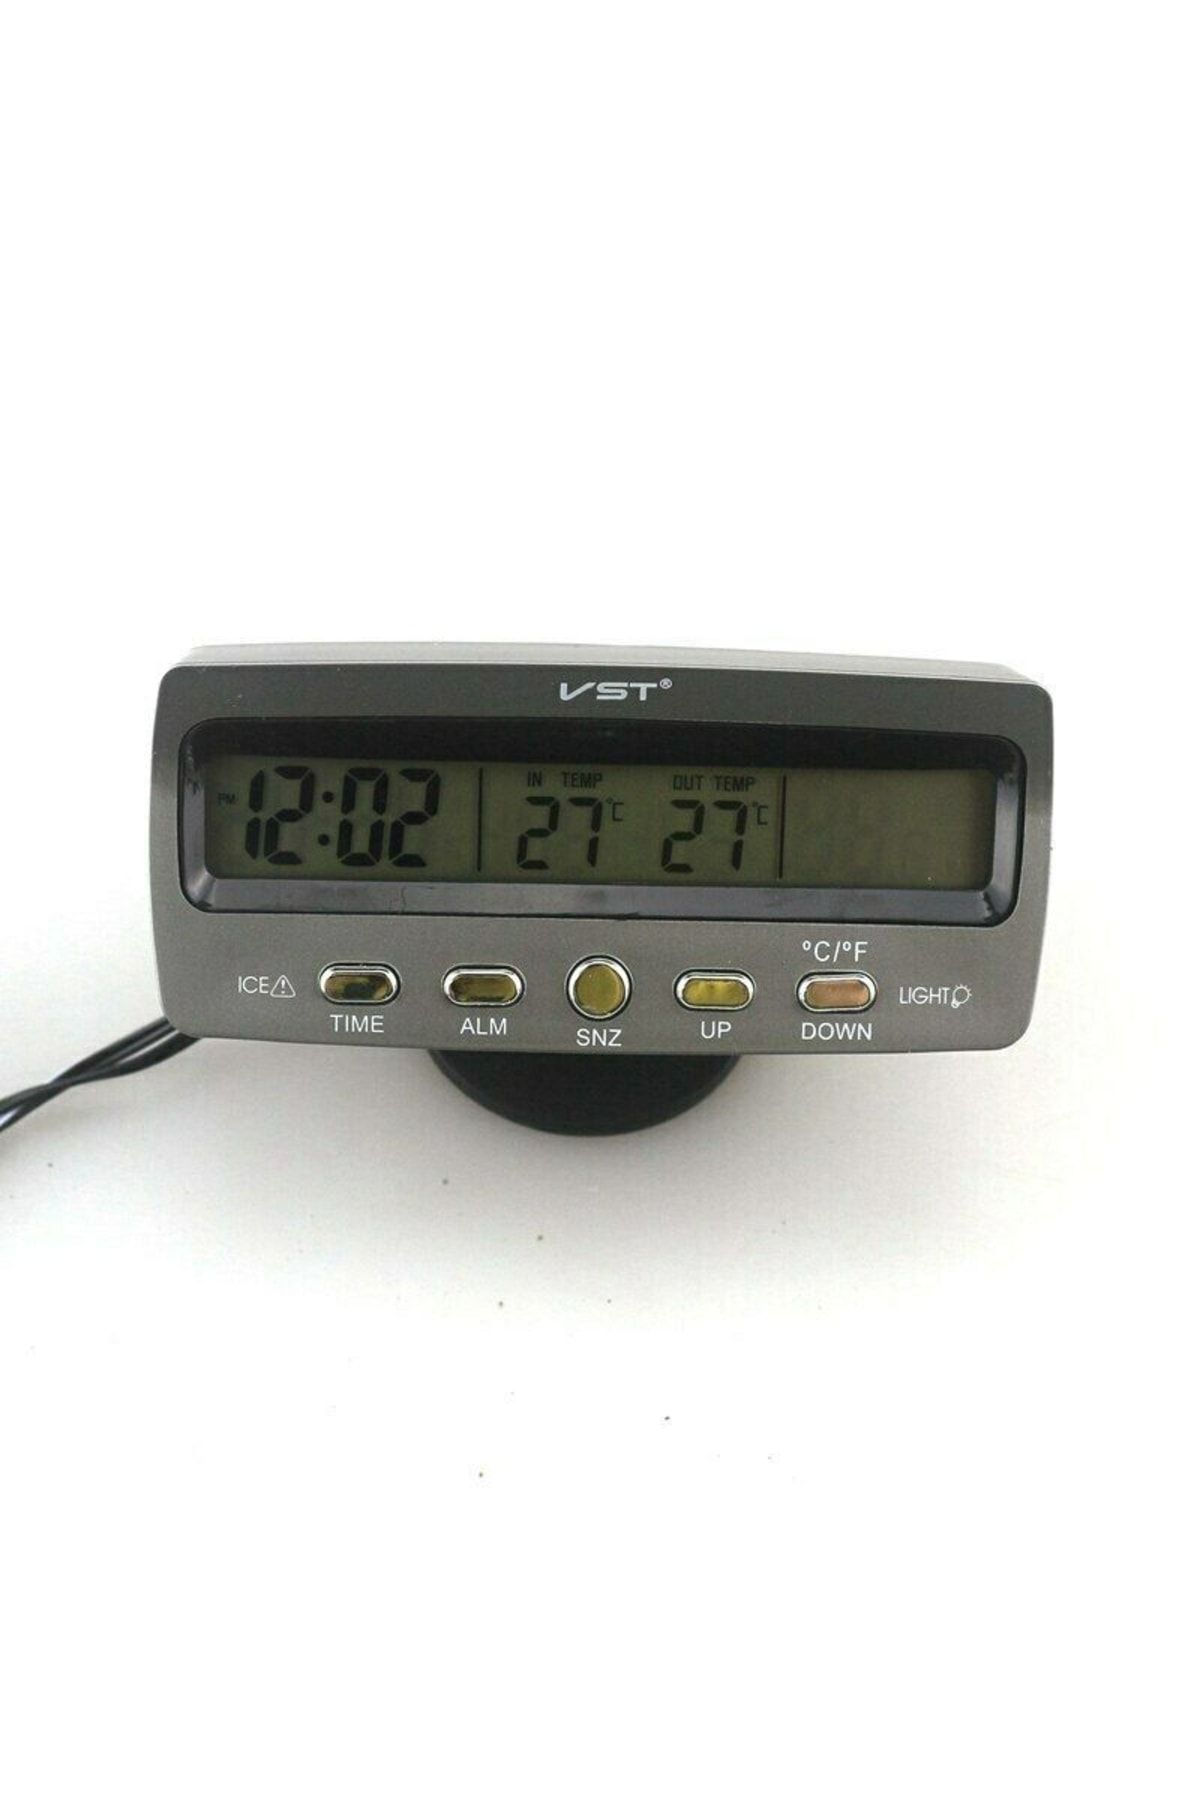 Techmaster Araba Araç Oto Çok Fonksiyonlu Termometre Saat Voltmetre Vst7045